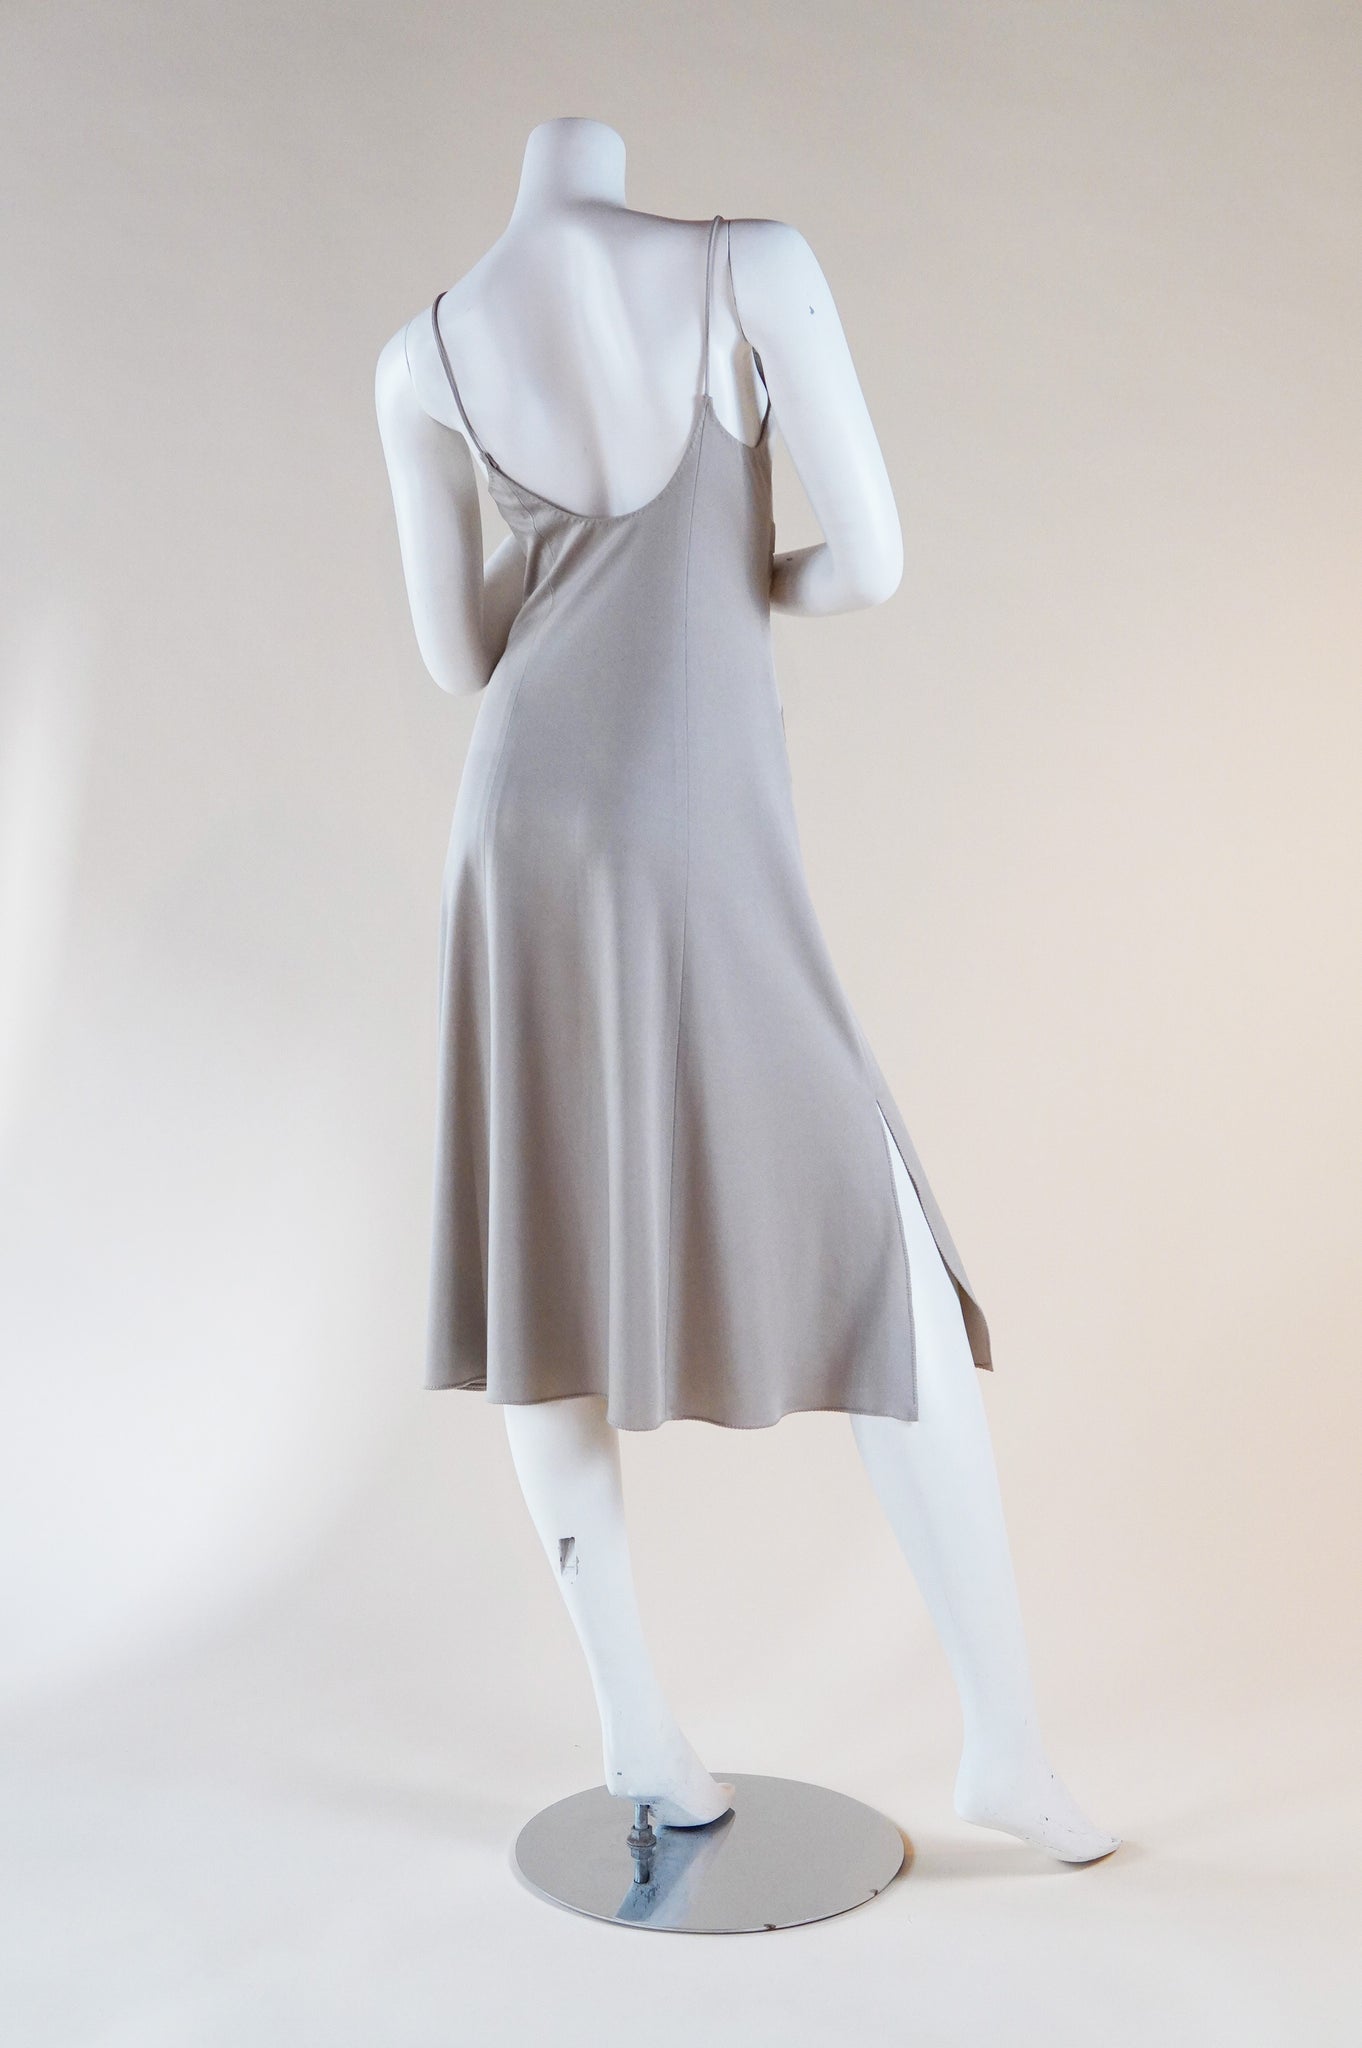 rare 1970s Stephen Burrows slip dress with zigzag stitching  - XS/S